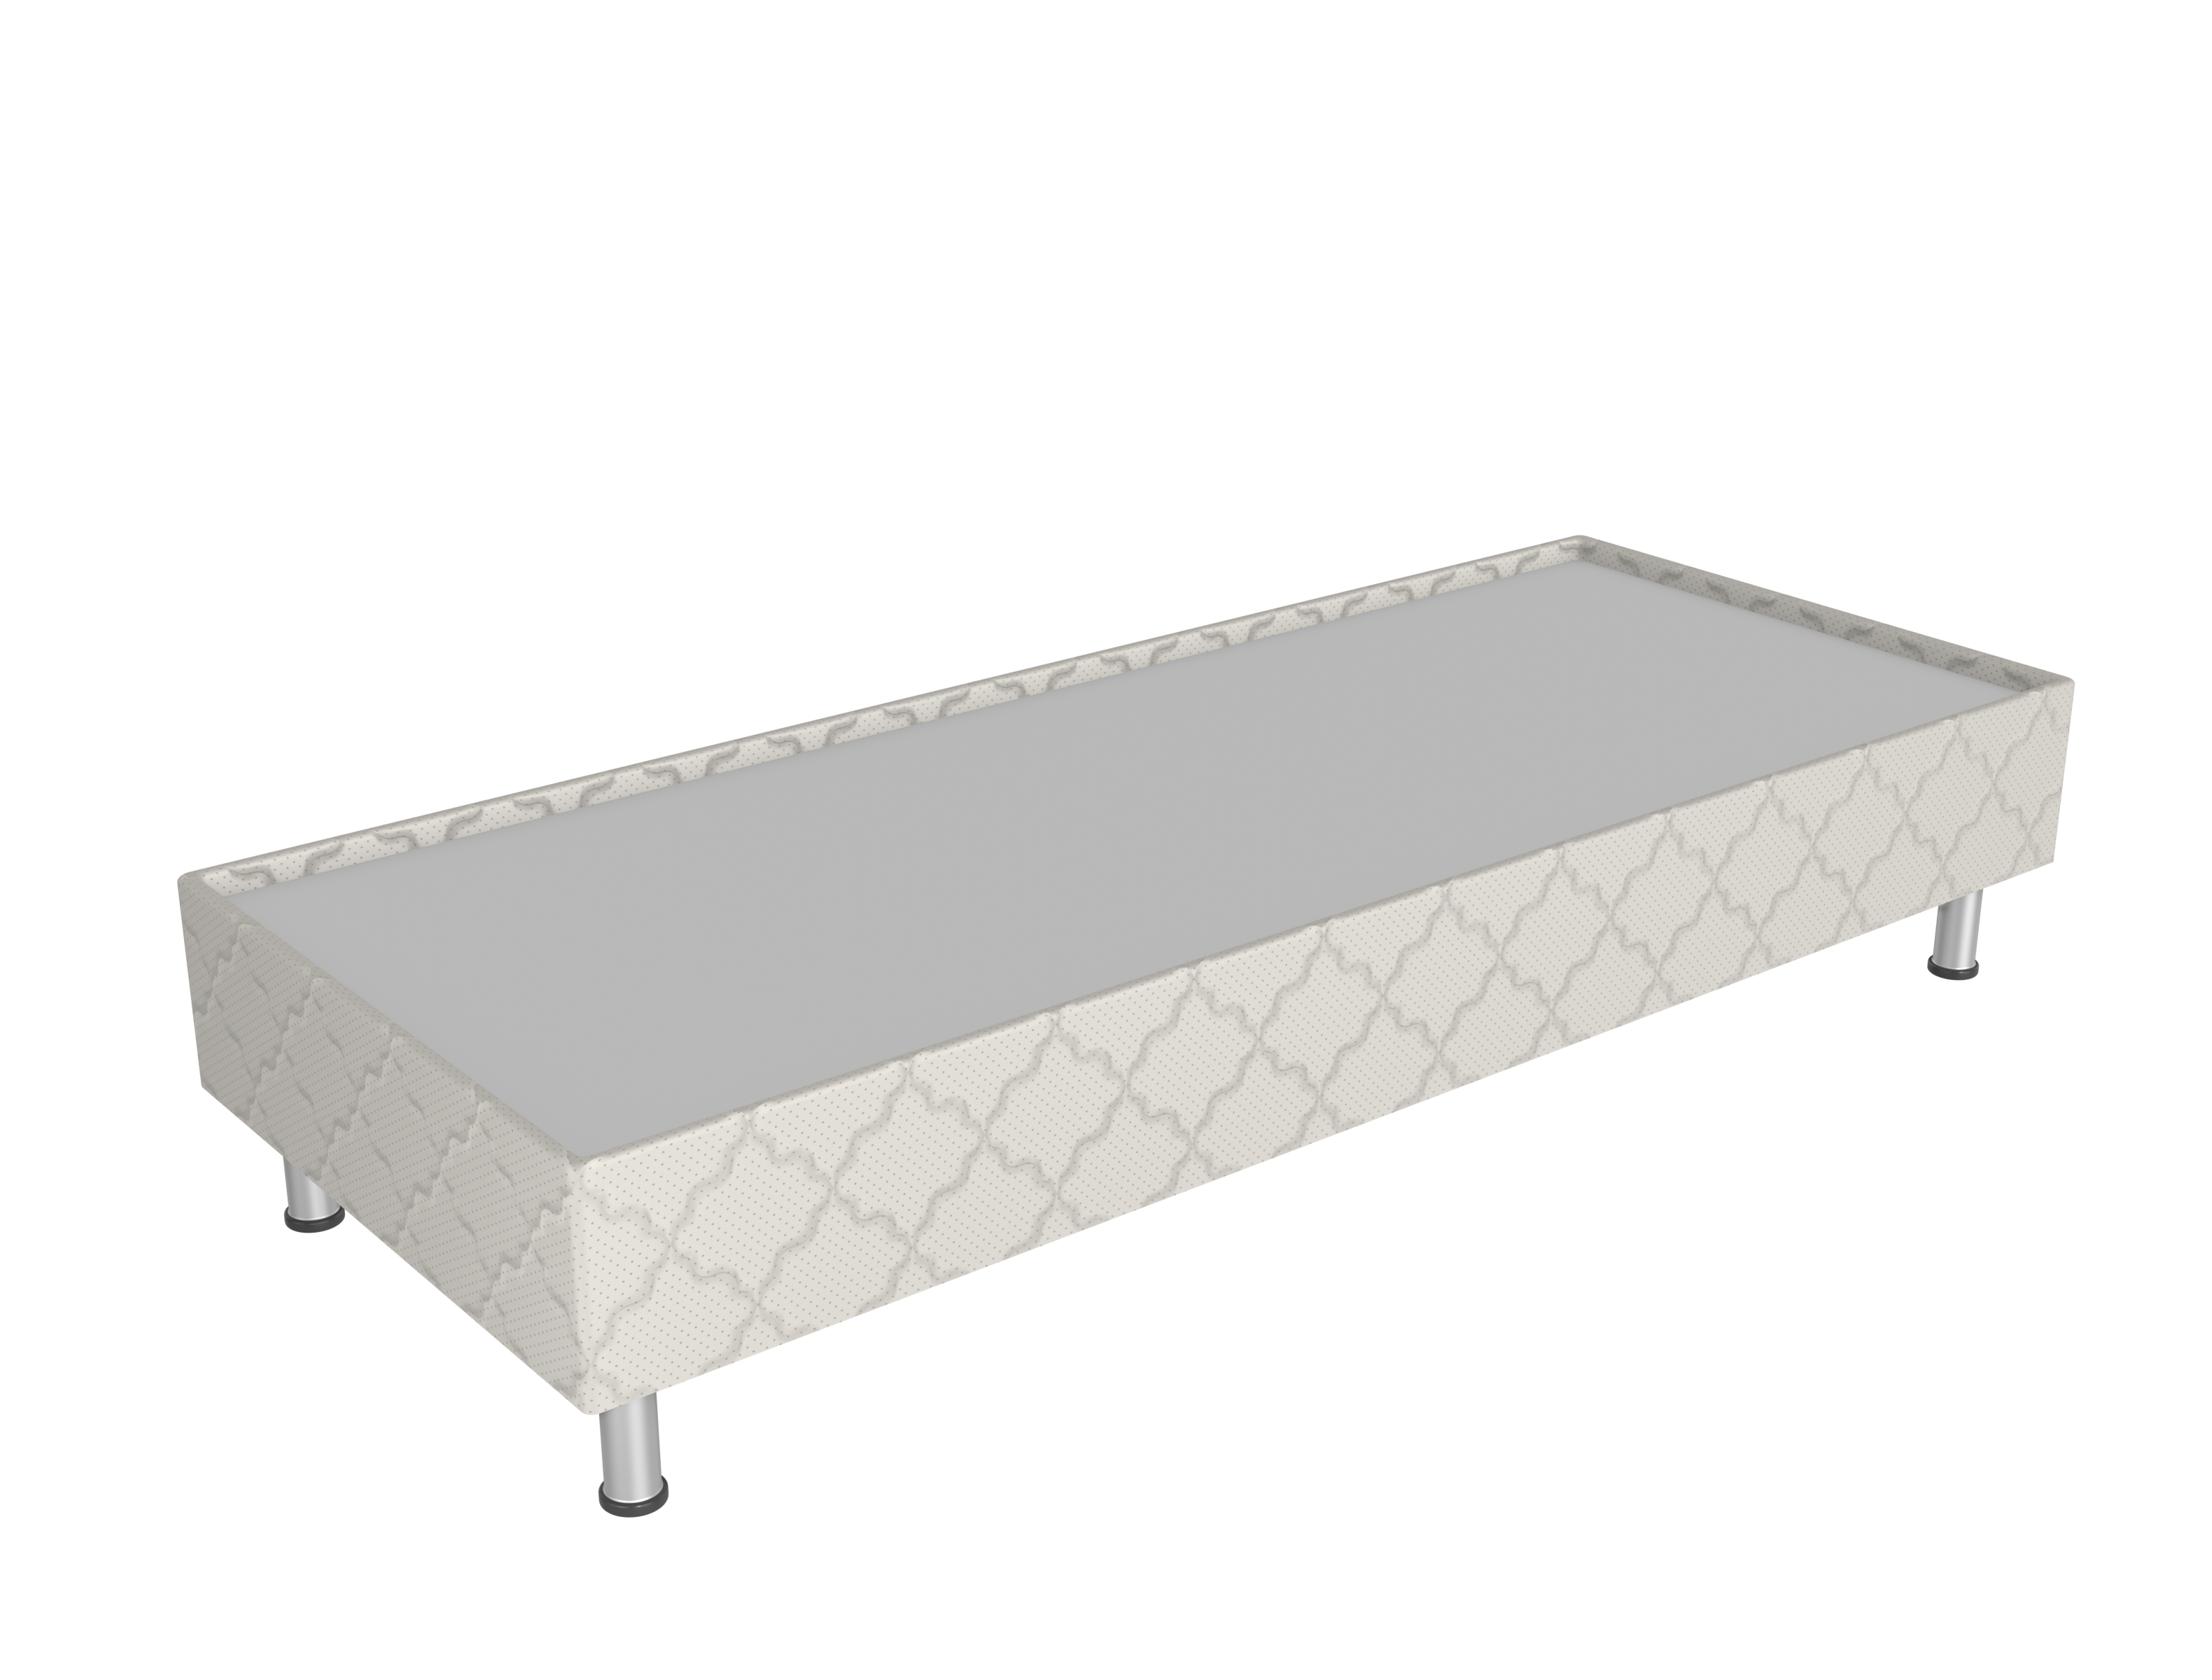 Spring box кровать основание — СБ-200/90 бежевый (2000х900х380 мм) для гостиницы